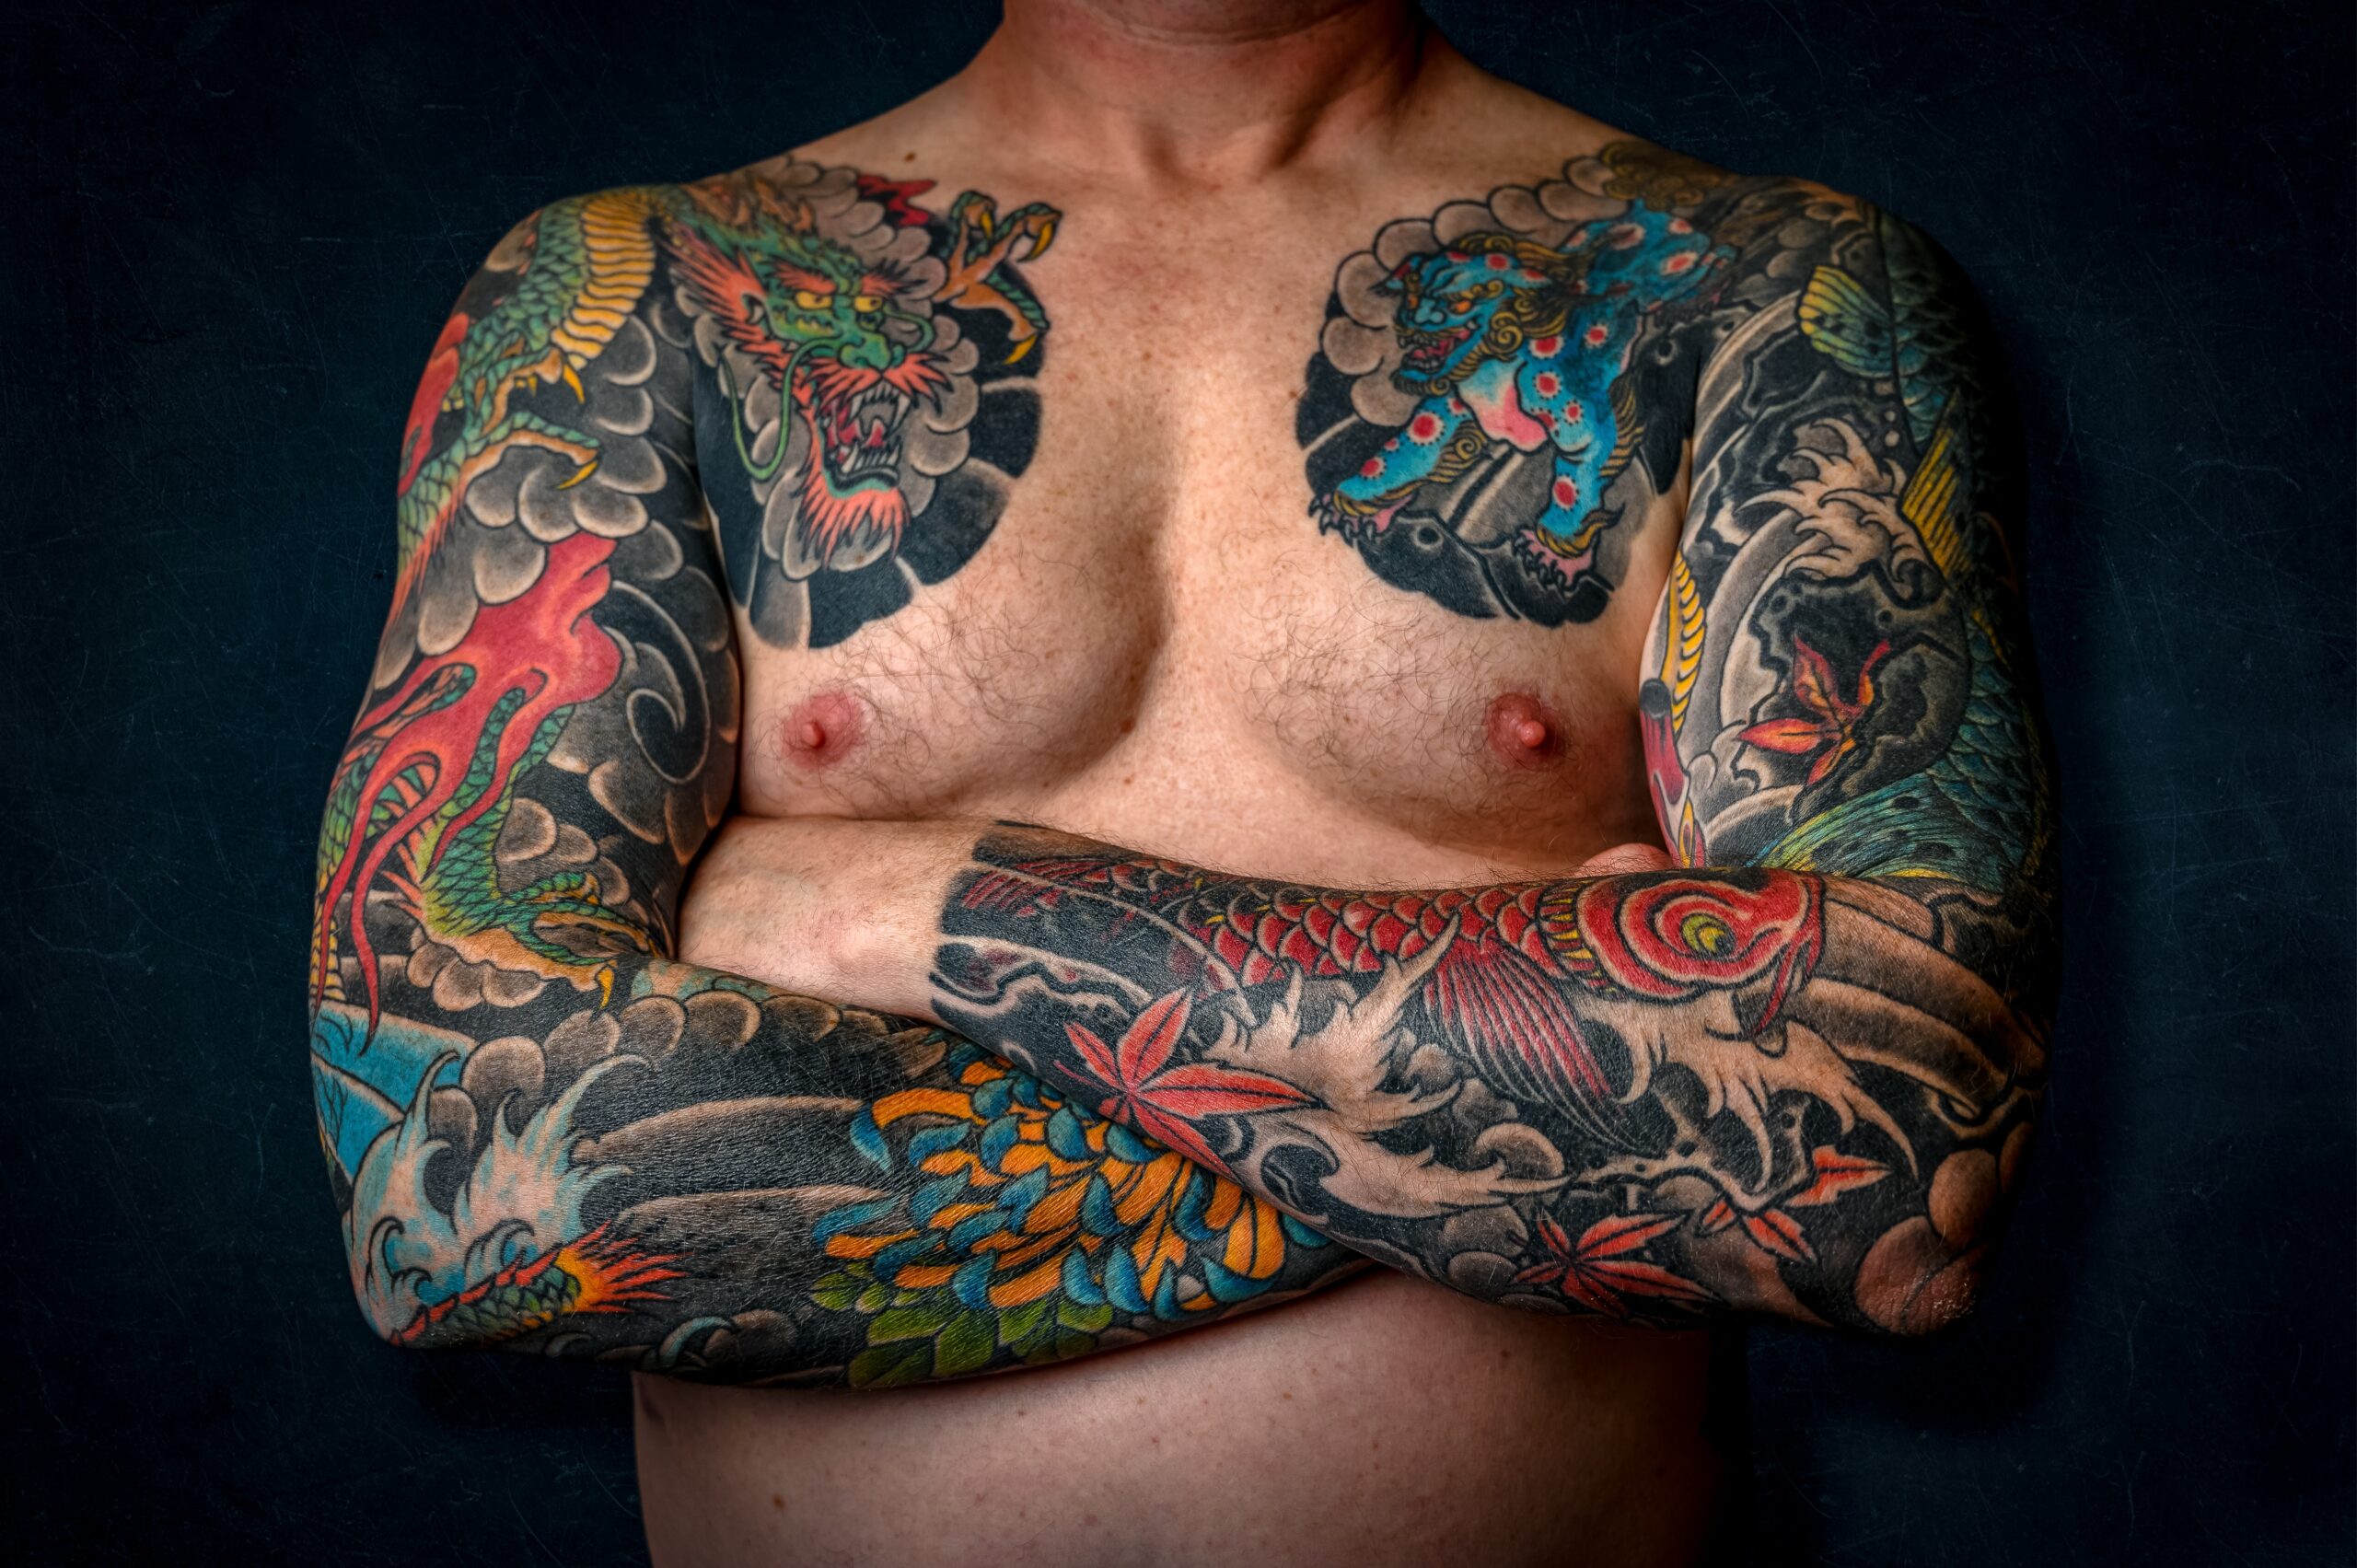 man with sleeve tattoos